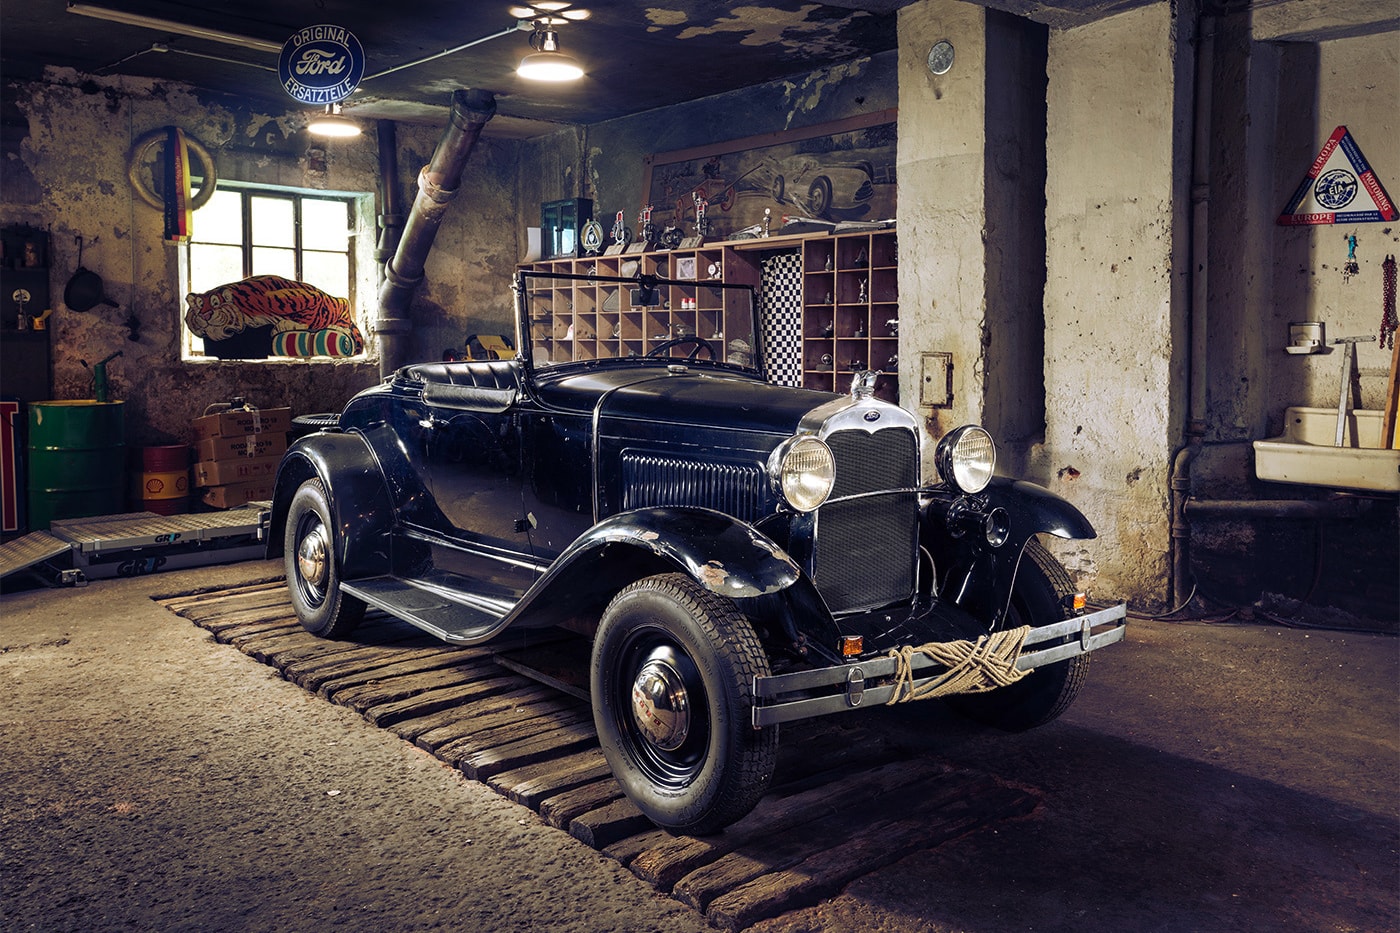 Classic Cars Parked Garages Ateliers WE! Shoot It Photography Project Ferrari Porsche Bentley